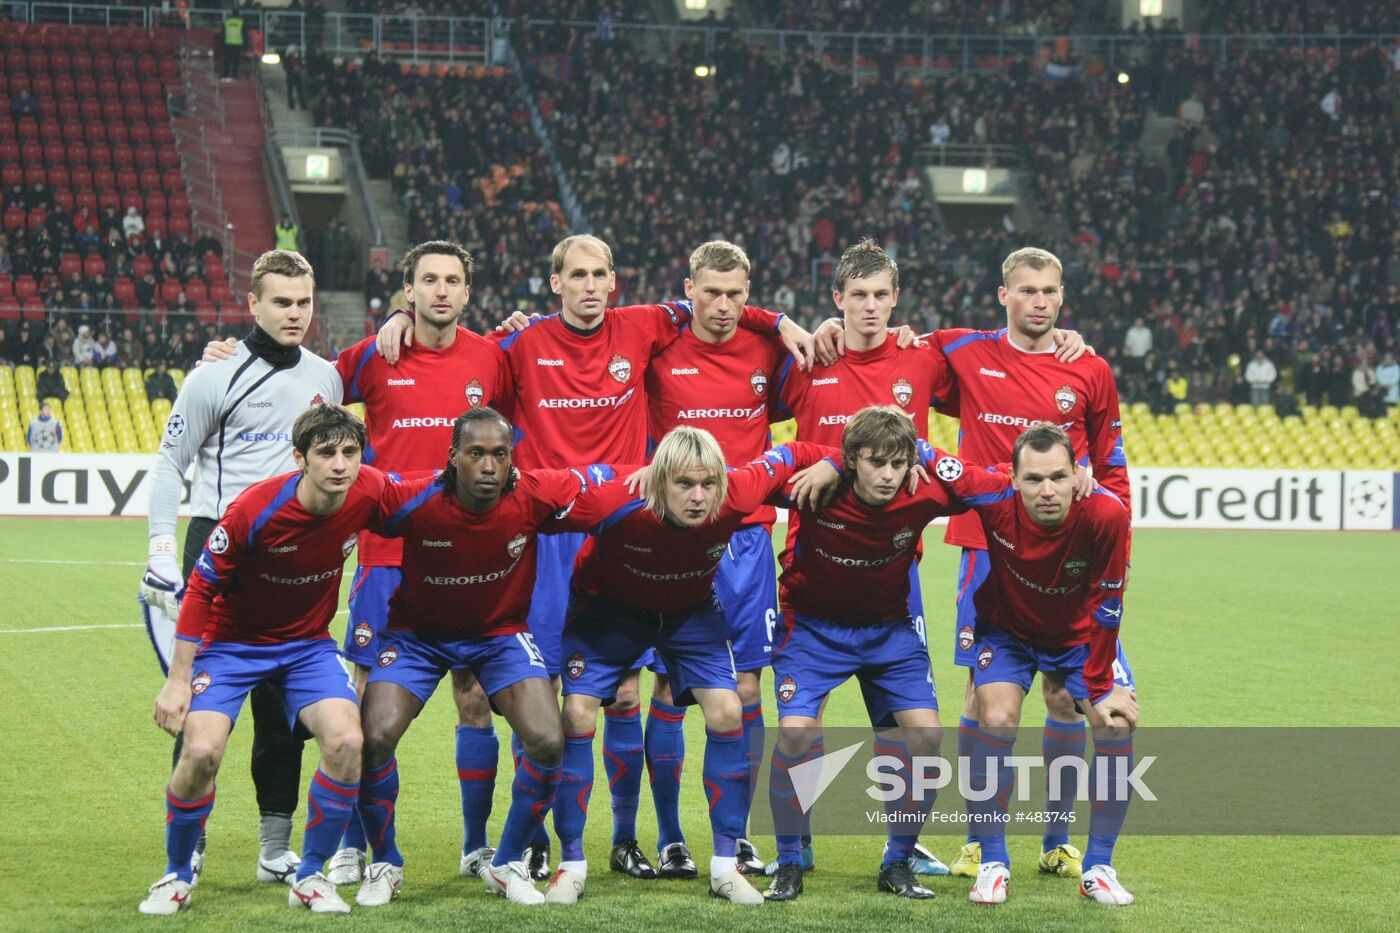 UEFA Champions League: CSKA Moscow vs. Manchester United